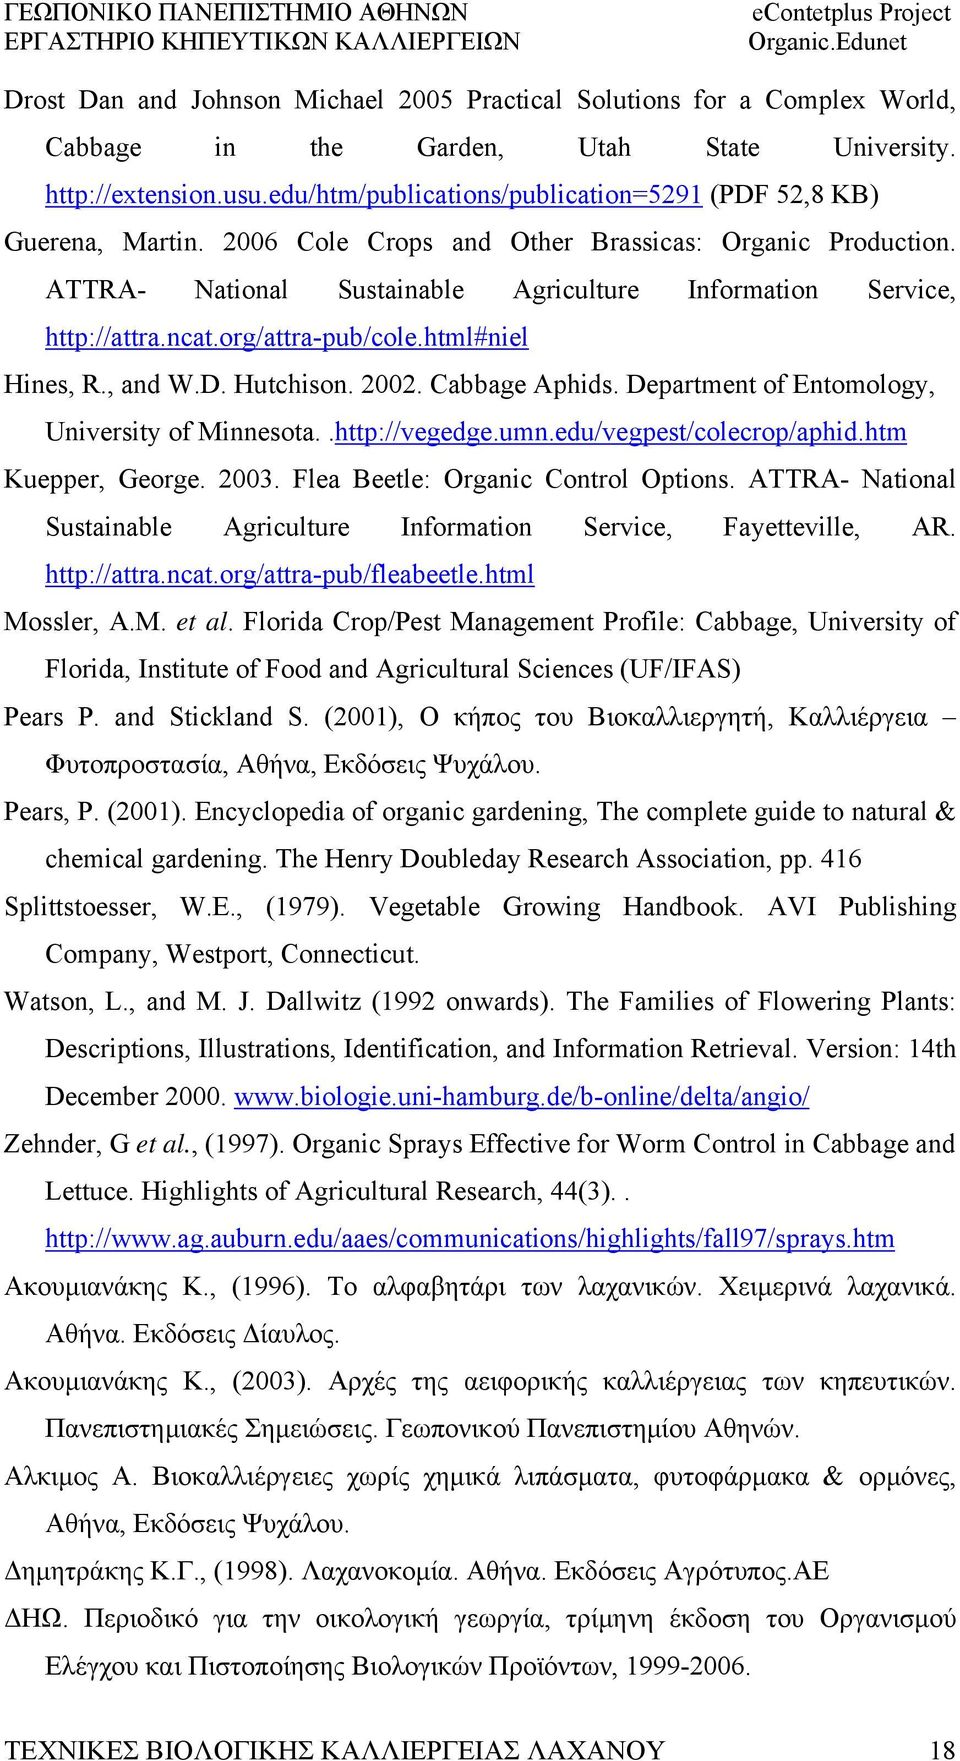 ncat.org/attra-pub/cole.html#niel Hines, R., and W.D. Hutchison. 2002. Cabbage Aphids. Department of Entomology, University of Minnesota..http://vegedge.umn.edu/vegpest/colecrop/aphid.